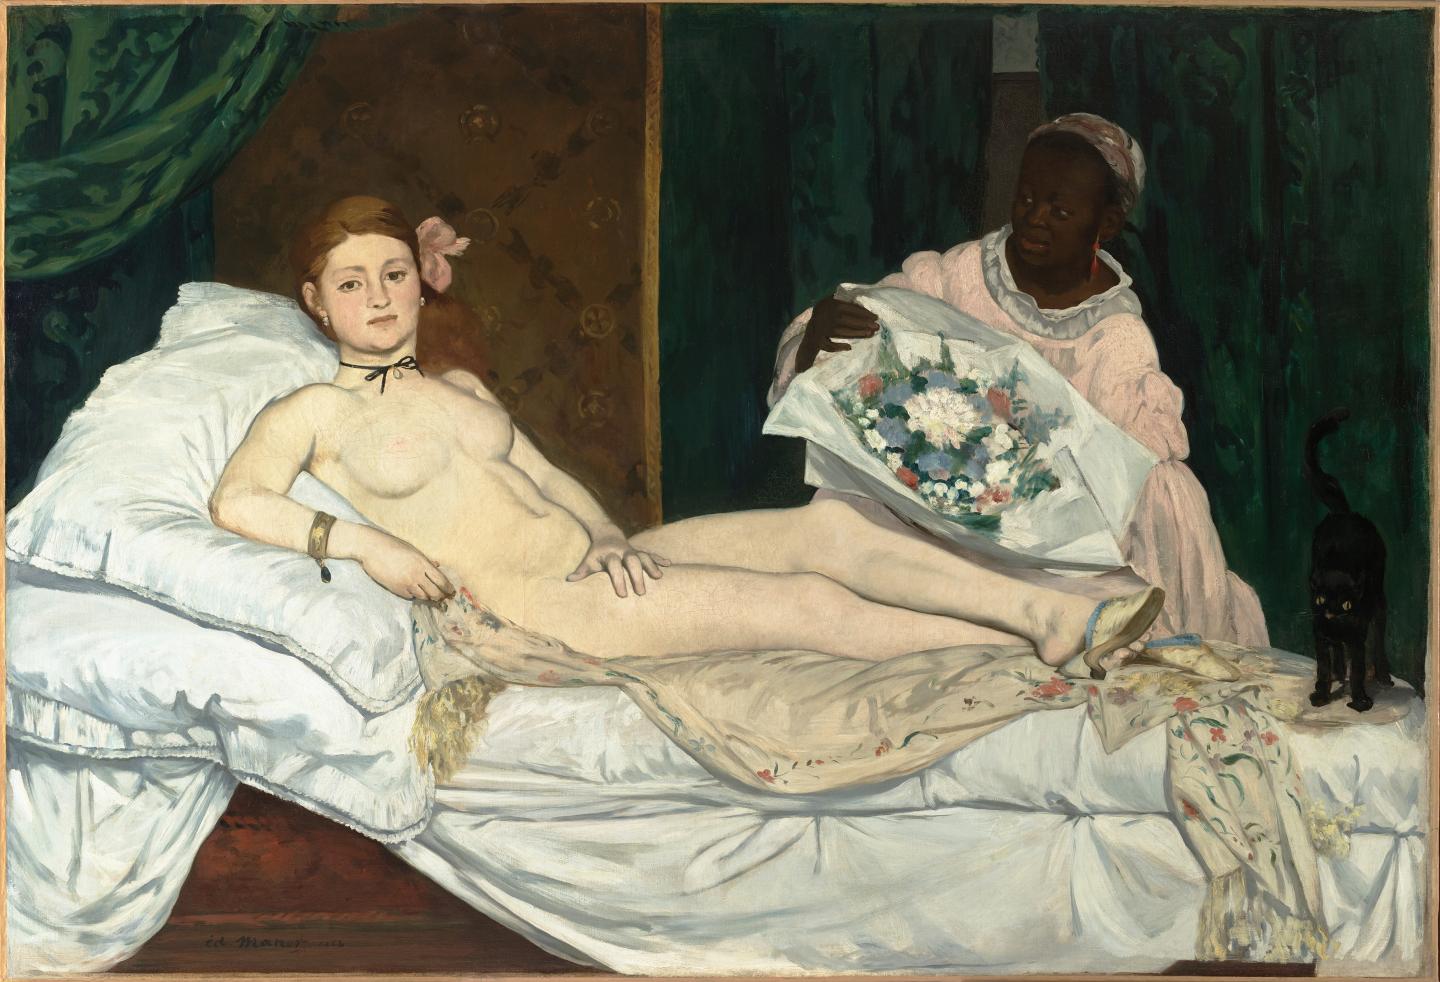 Edouard Manet's painting "Olympia"